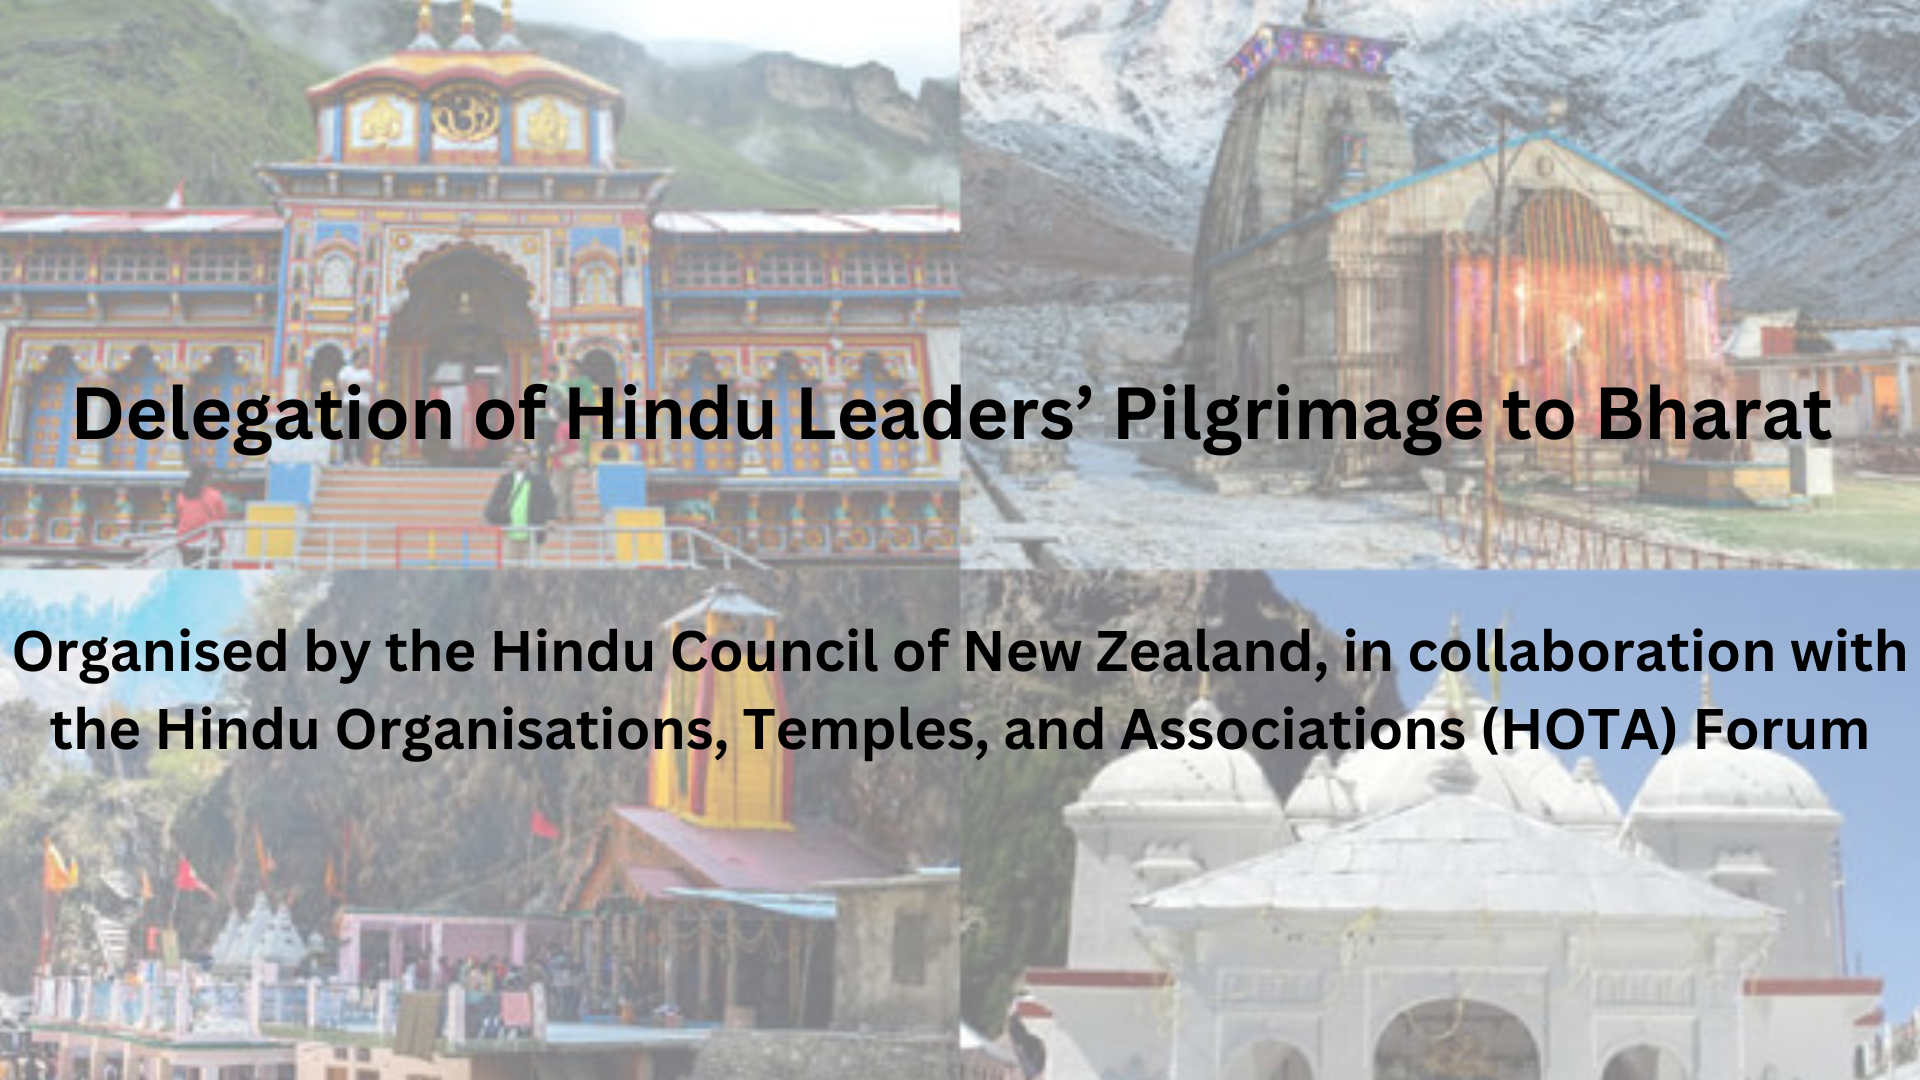 Historical Bharat Pilgrimage yatra by Hindu leaders form New Zealand and Australia